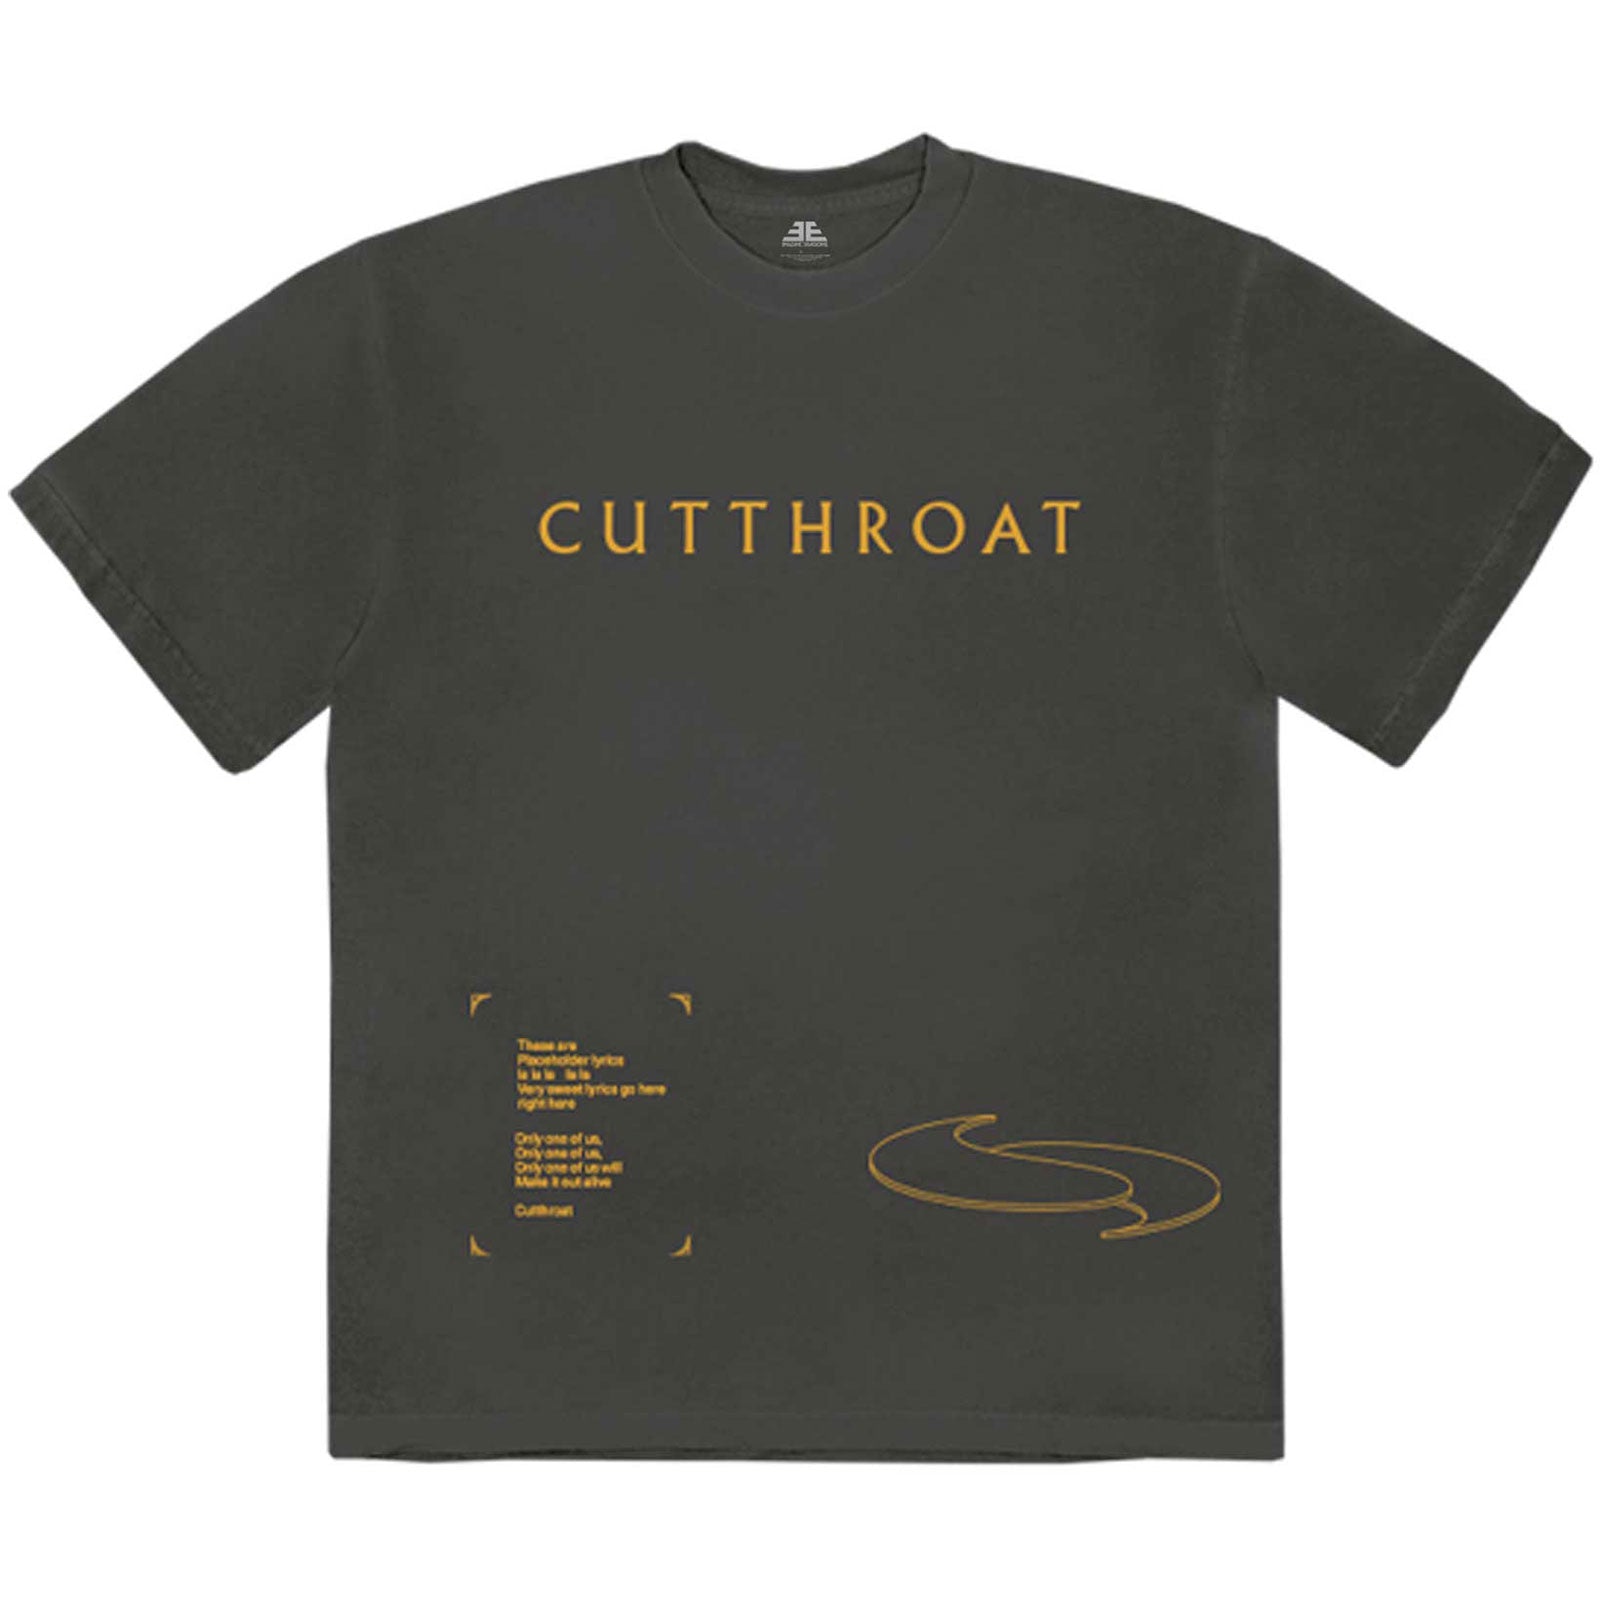 Imagine Dragons T-Shirt – Cutthroat-Symbole – Unisex, offizielles Lizenzdesign